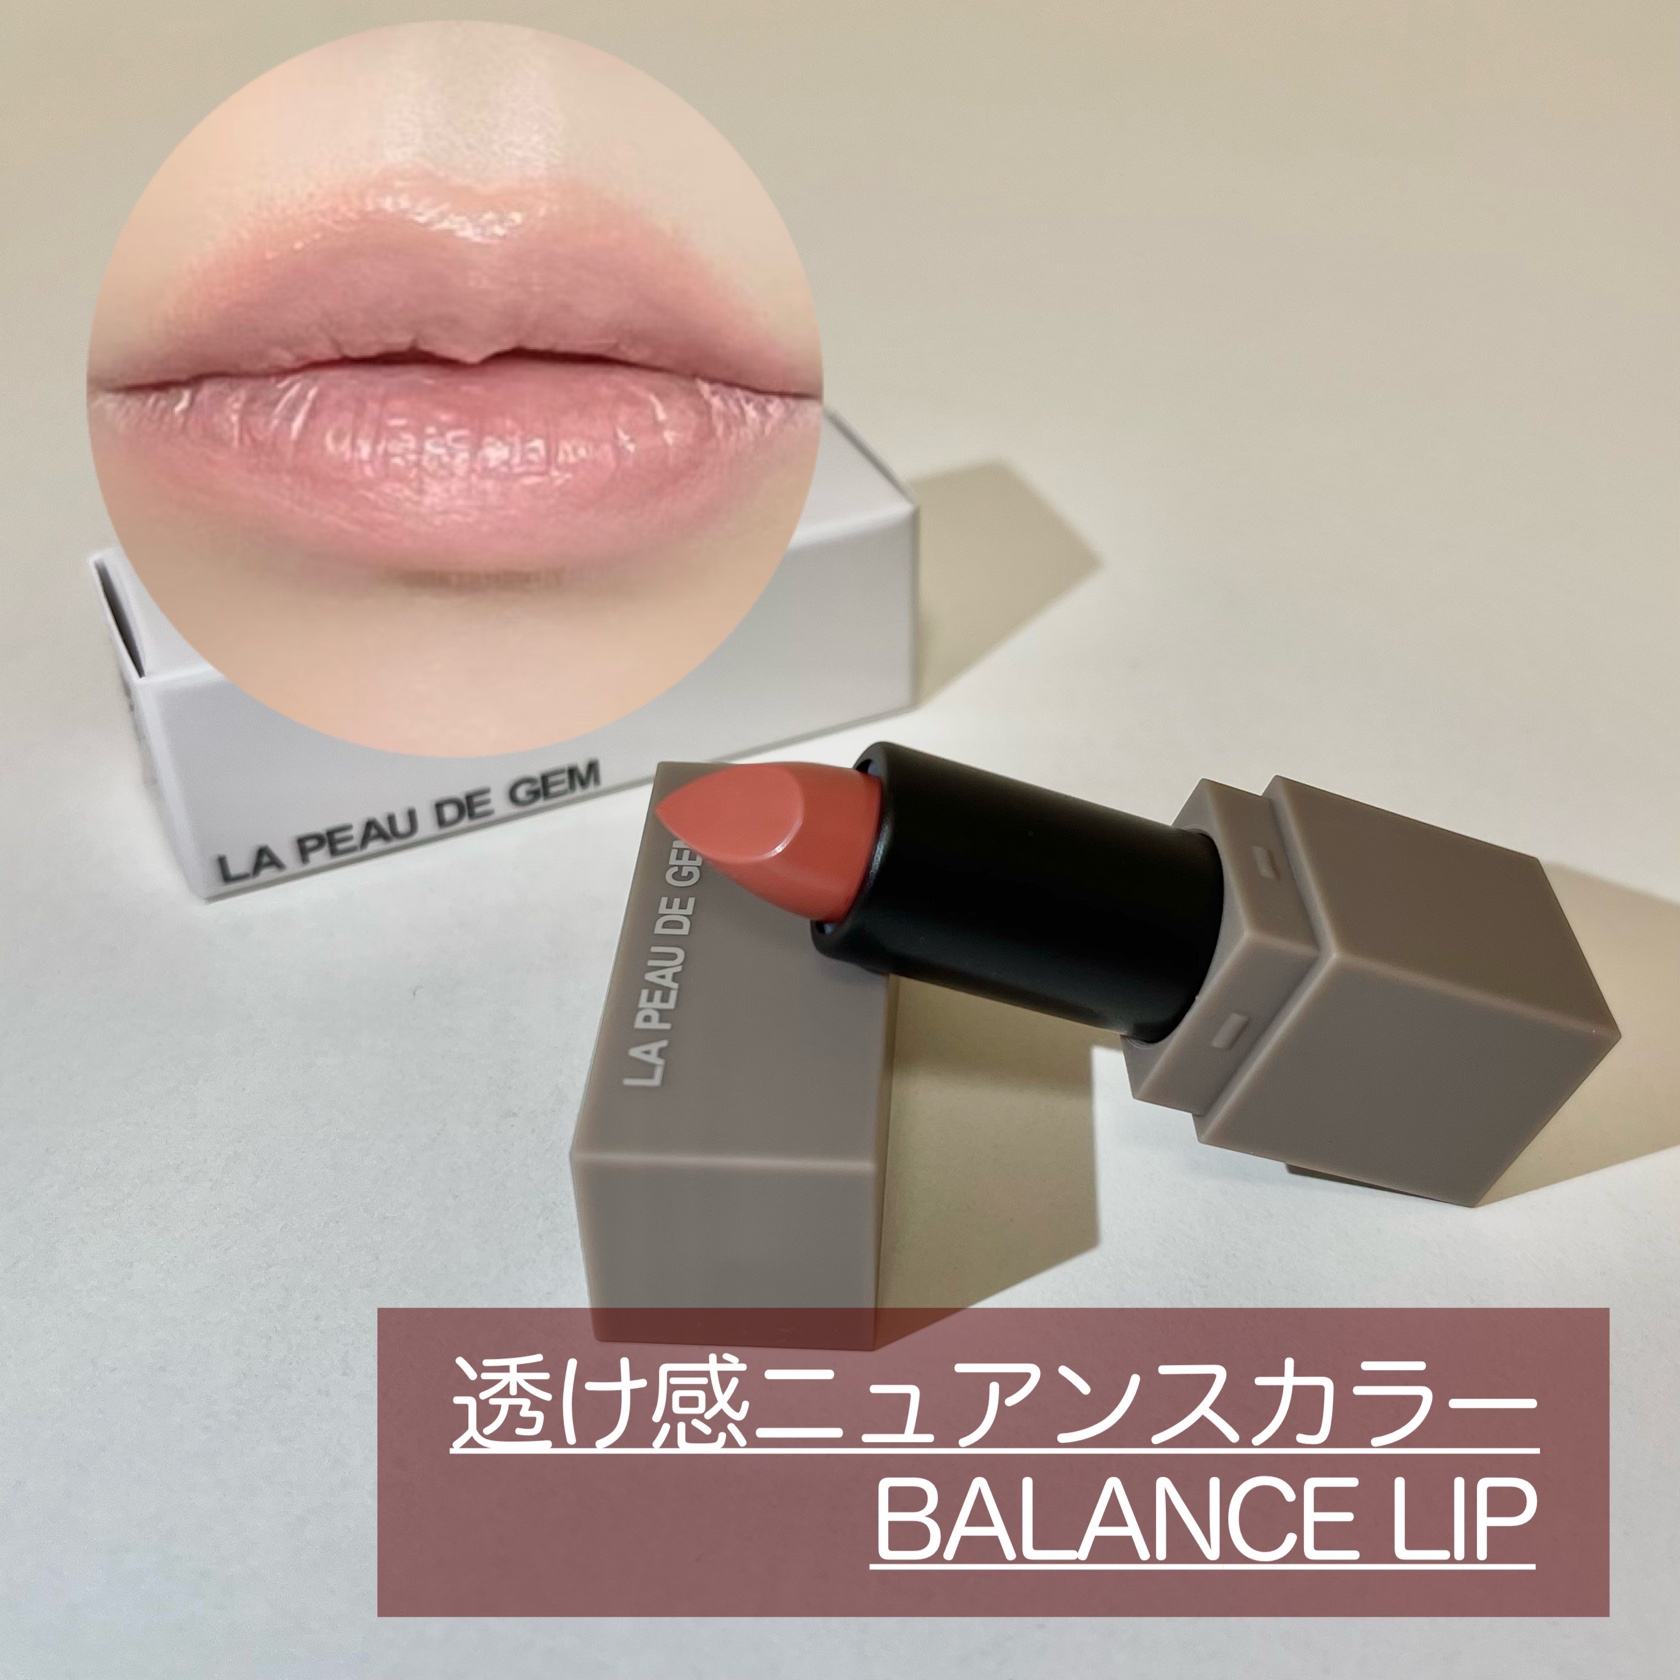 la peau de gem / BALANCE LIP bl-02 マニッシュピンクの公式商品情報